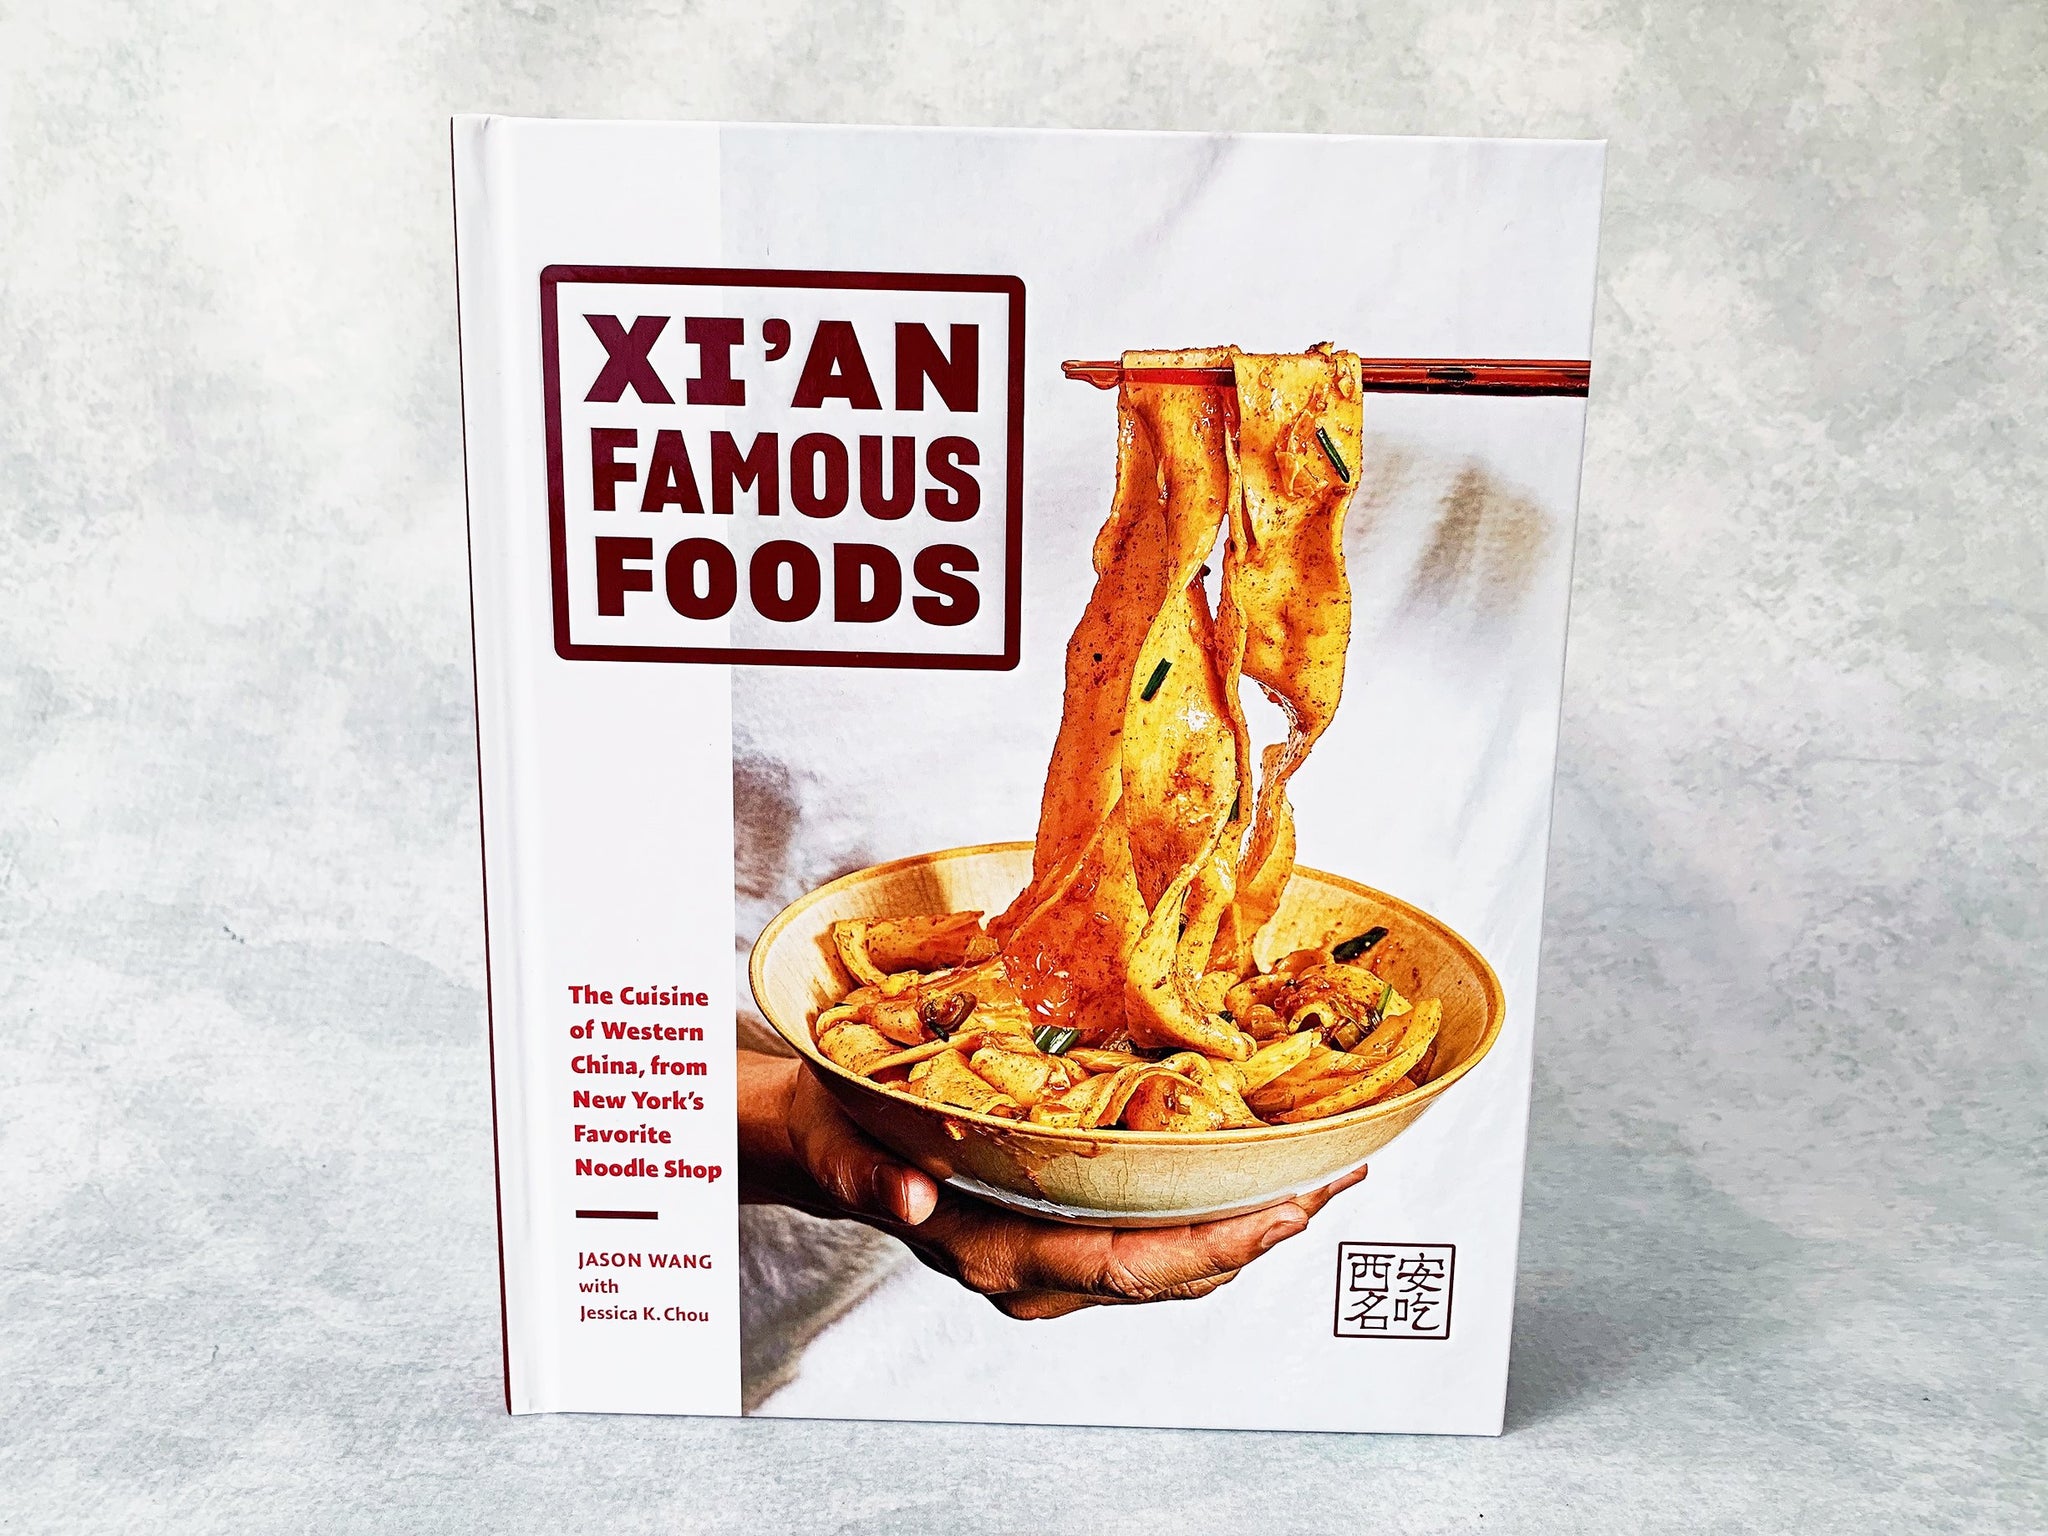 Xi'an Famous Foods (Cookbook by Jason Wang)